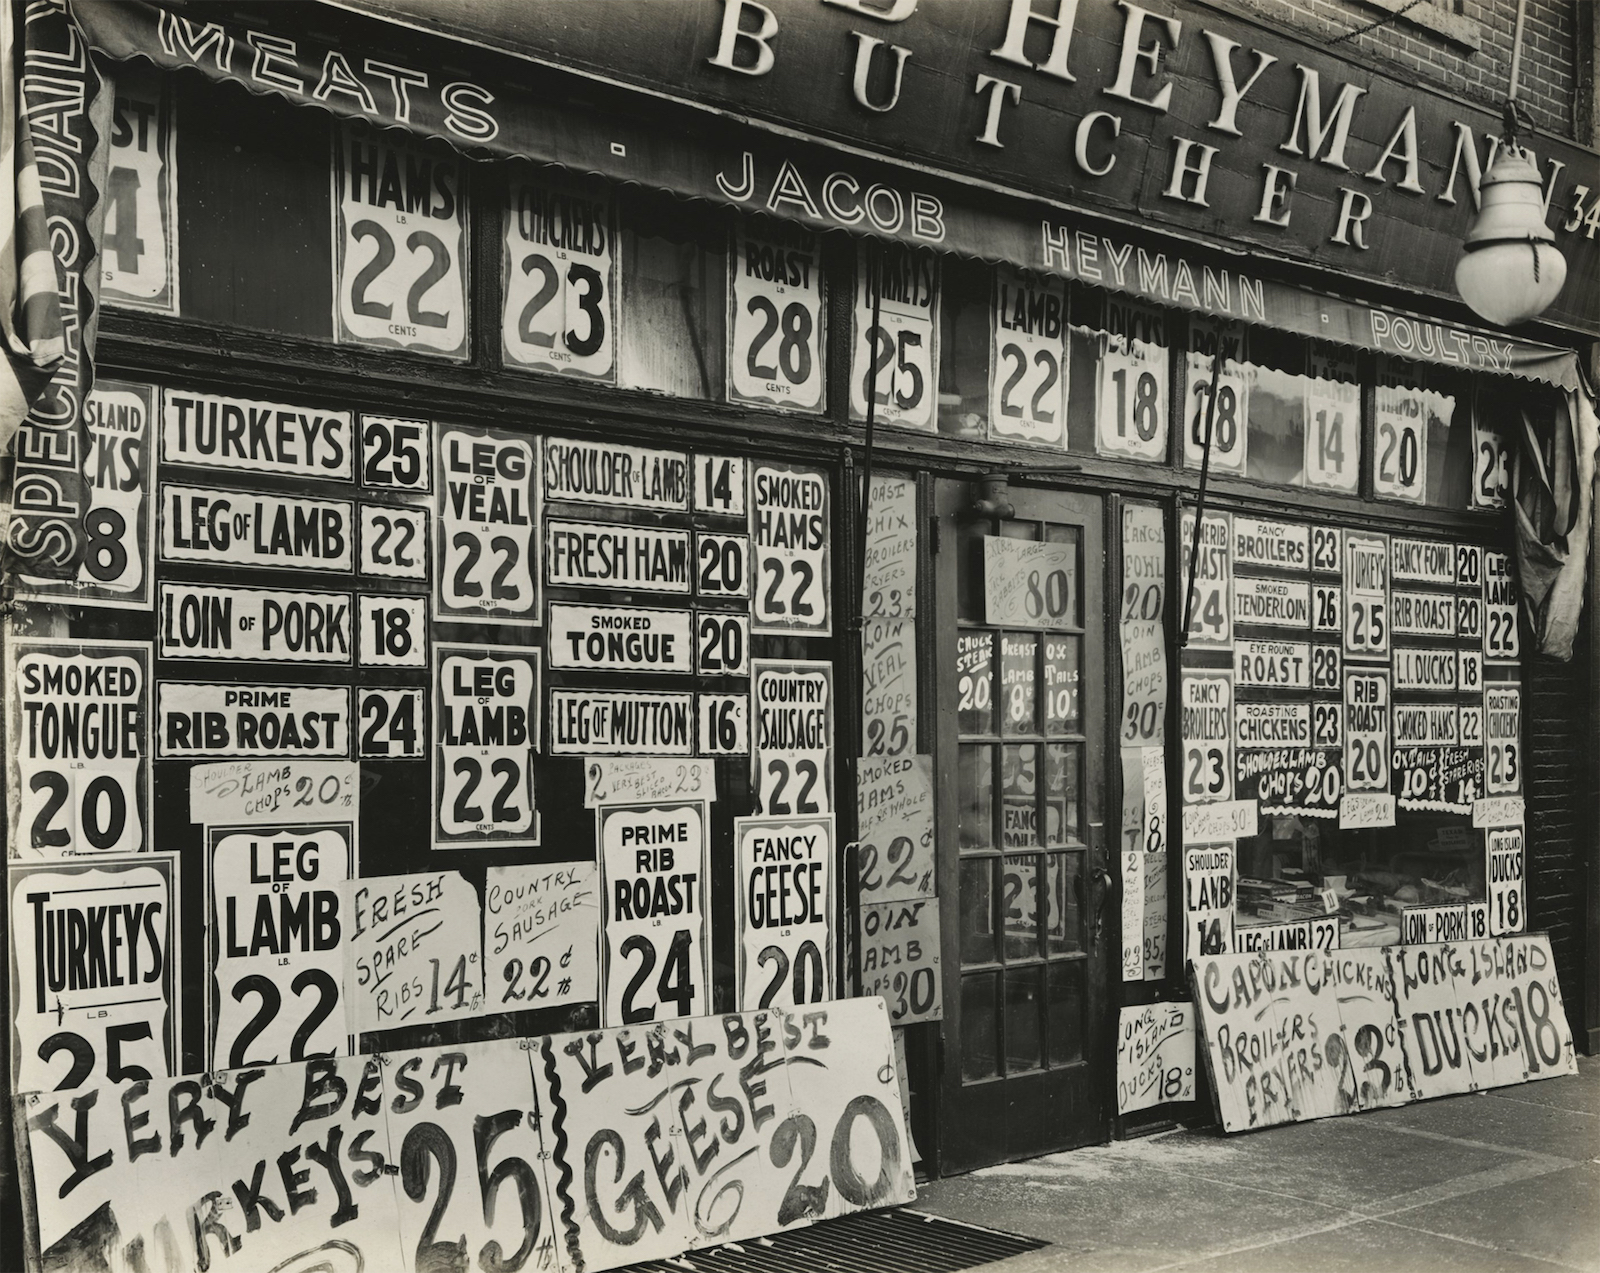 Jacob Heymann Butcher Shop, New York City, 1938